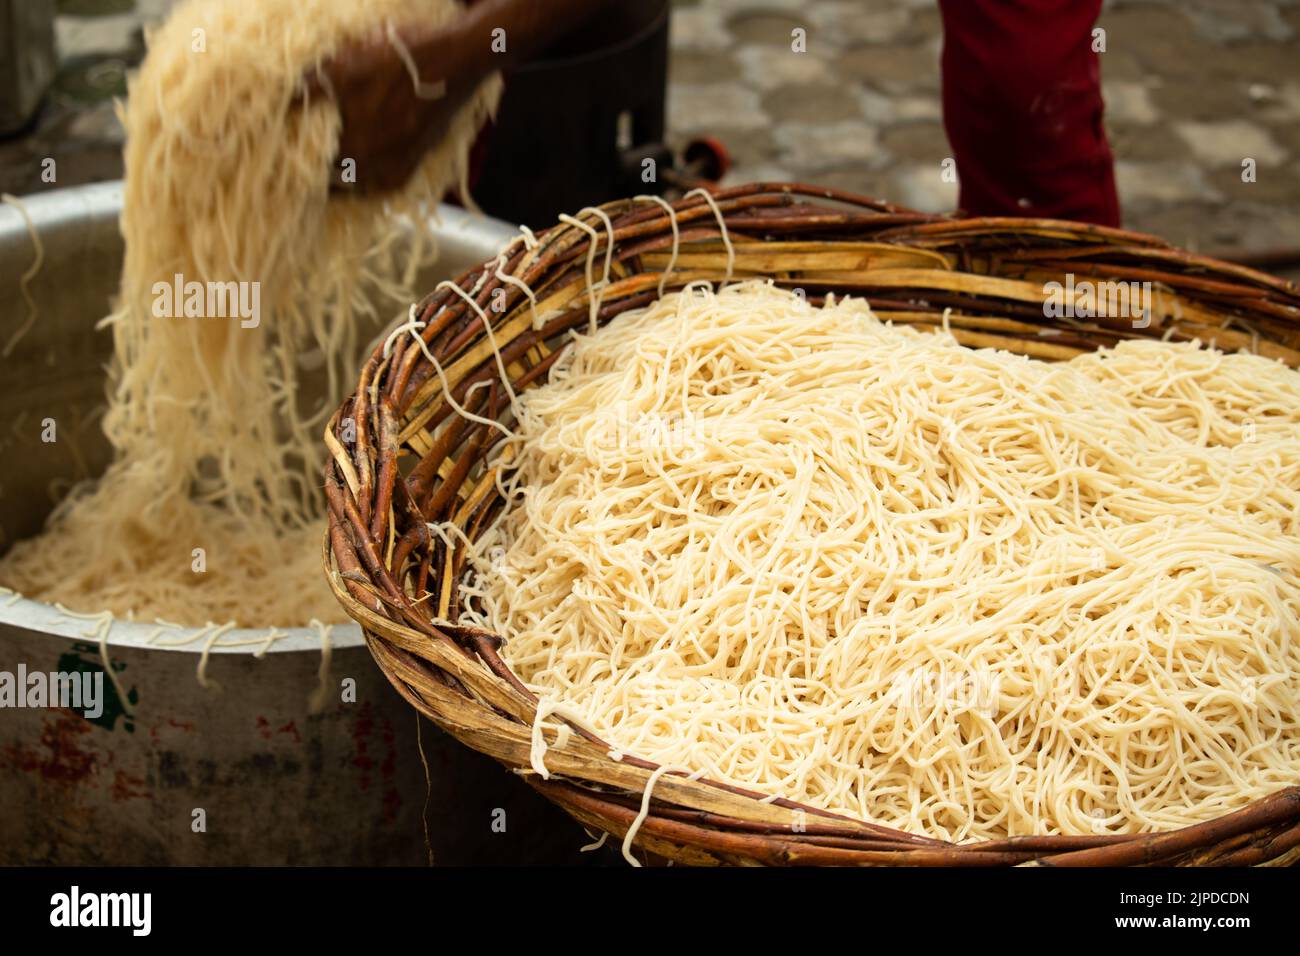 Cinese Schezwan anche chiamato Szechwan Veg Hakka Noodles Chowmin o Indian Veg Chow Mein essere lavato sciacquato in acqua in bambù Basket. Stile dhaba Bul Foto Stock